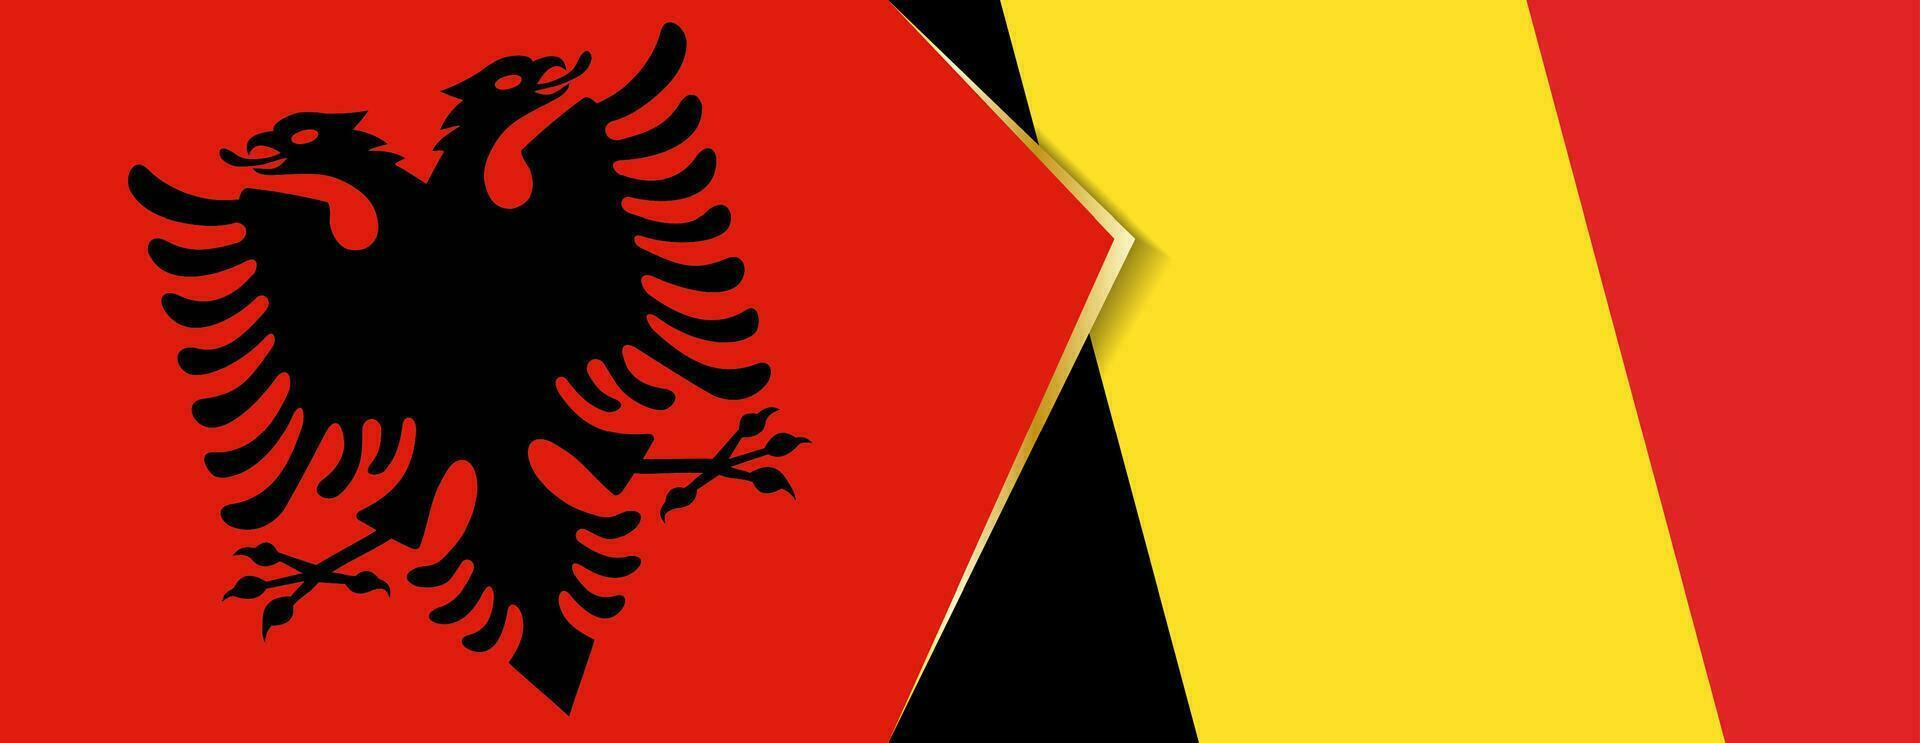 Albanien und Belgien Flaggen, zwei Vektor Flaggen.